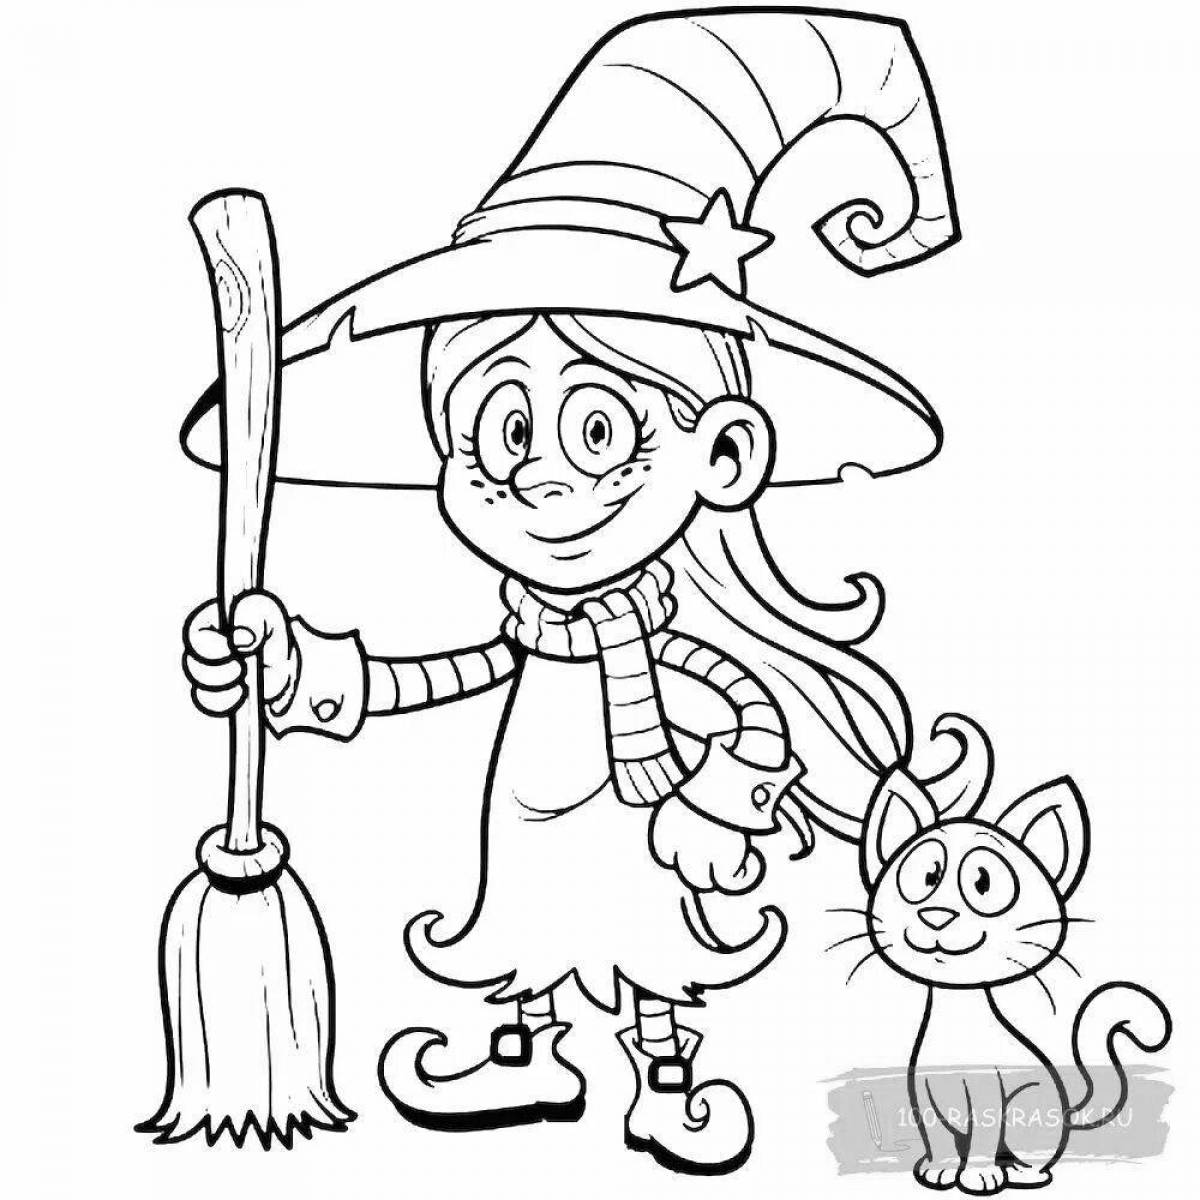 Witchy coloring page для настоящих ведьм